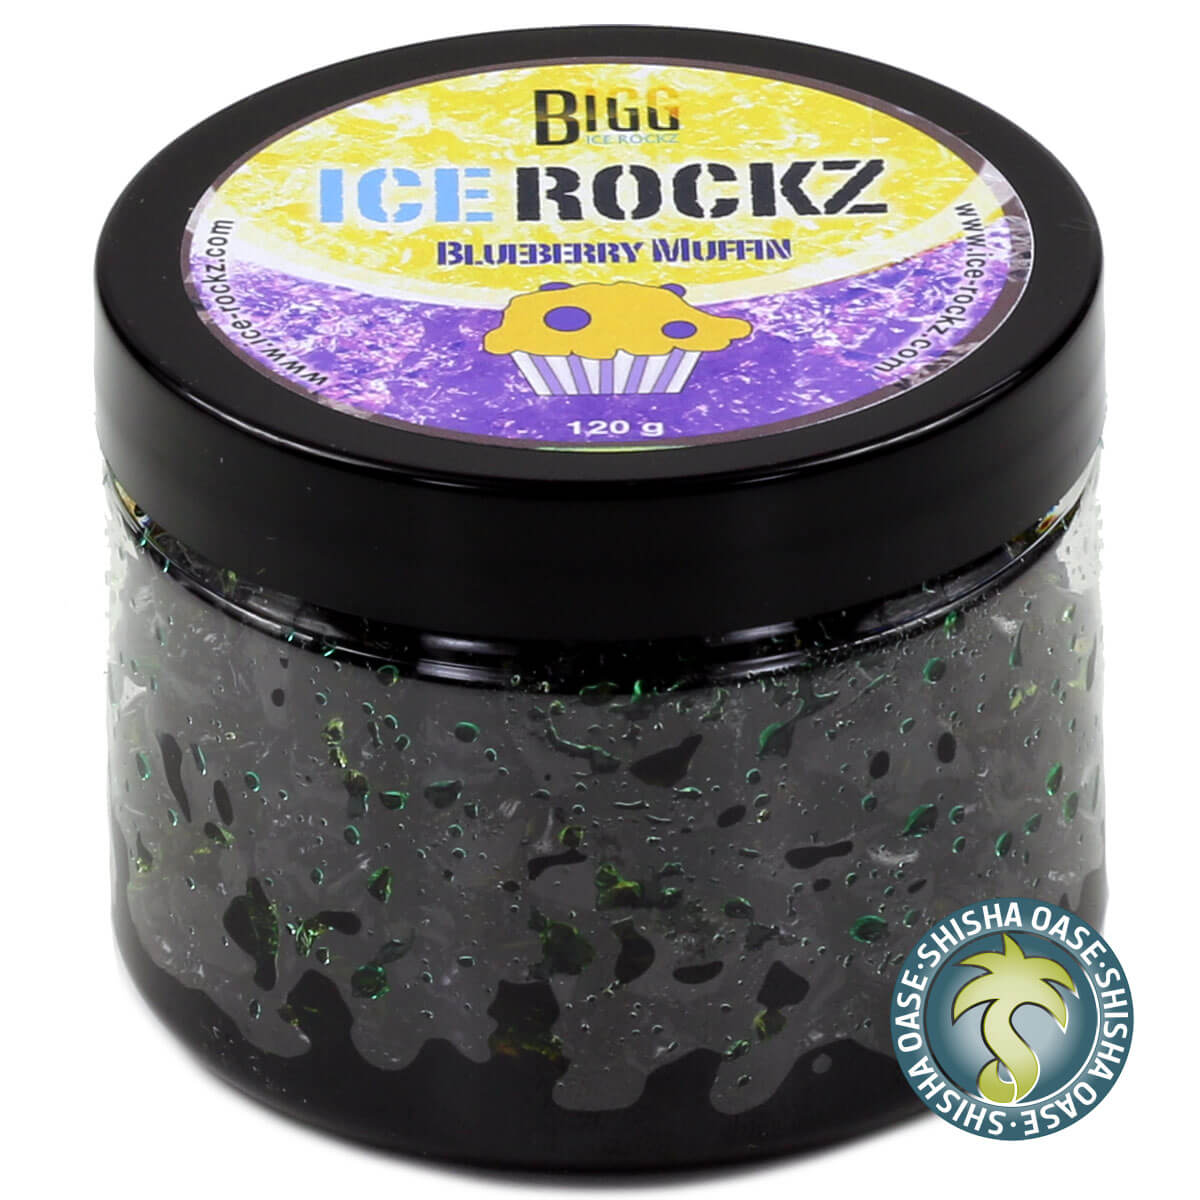 Bigg Ice Rockz - Blueberry Muffin 120g